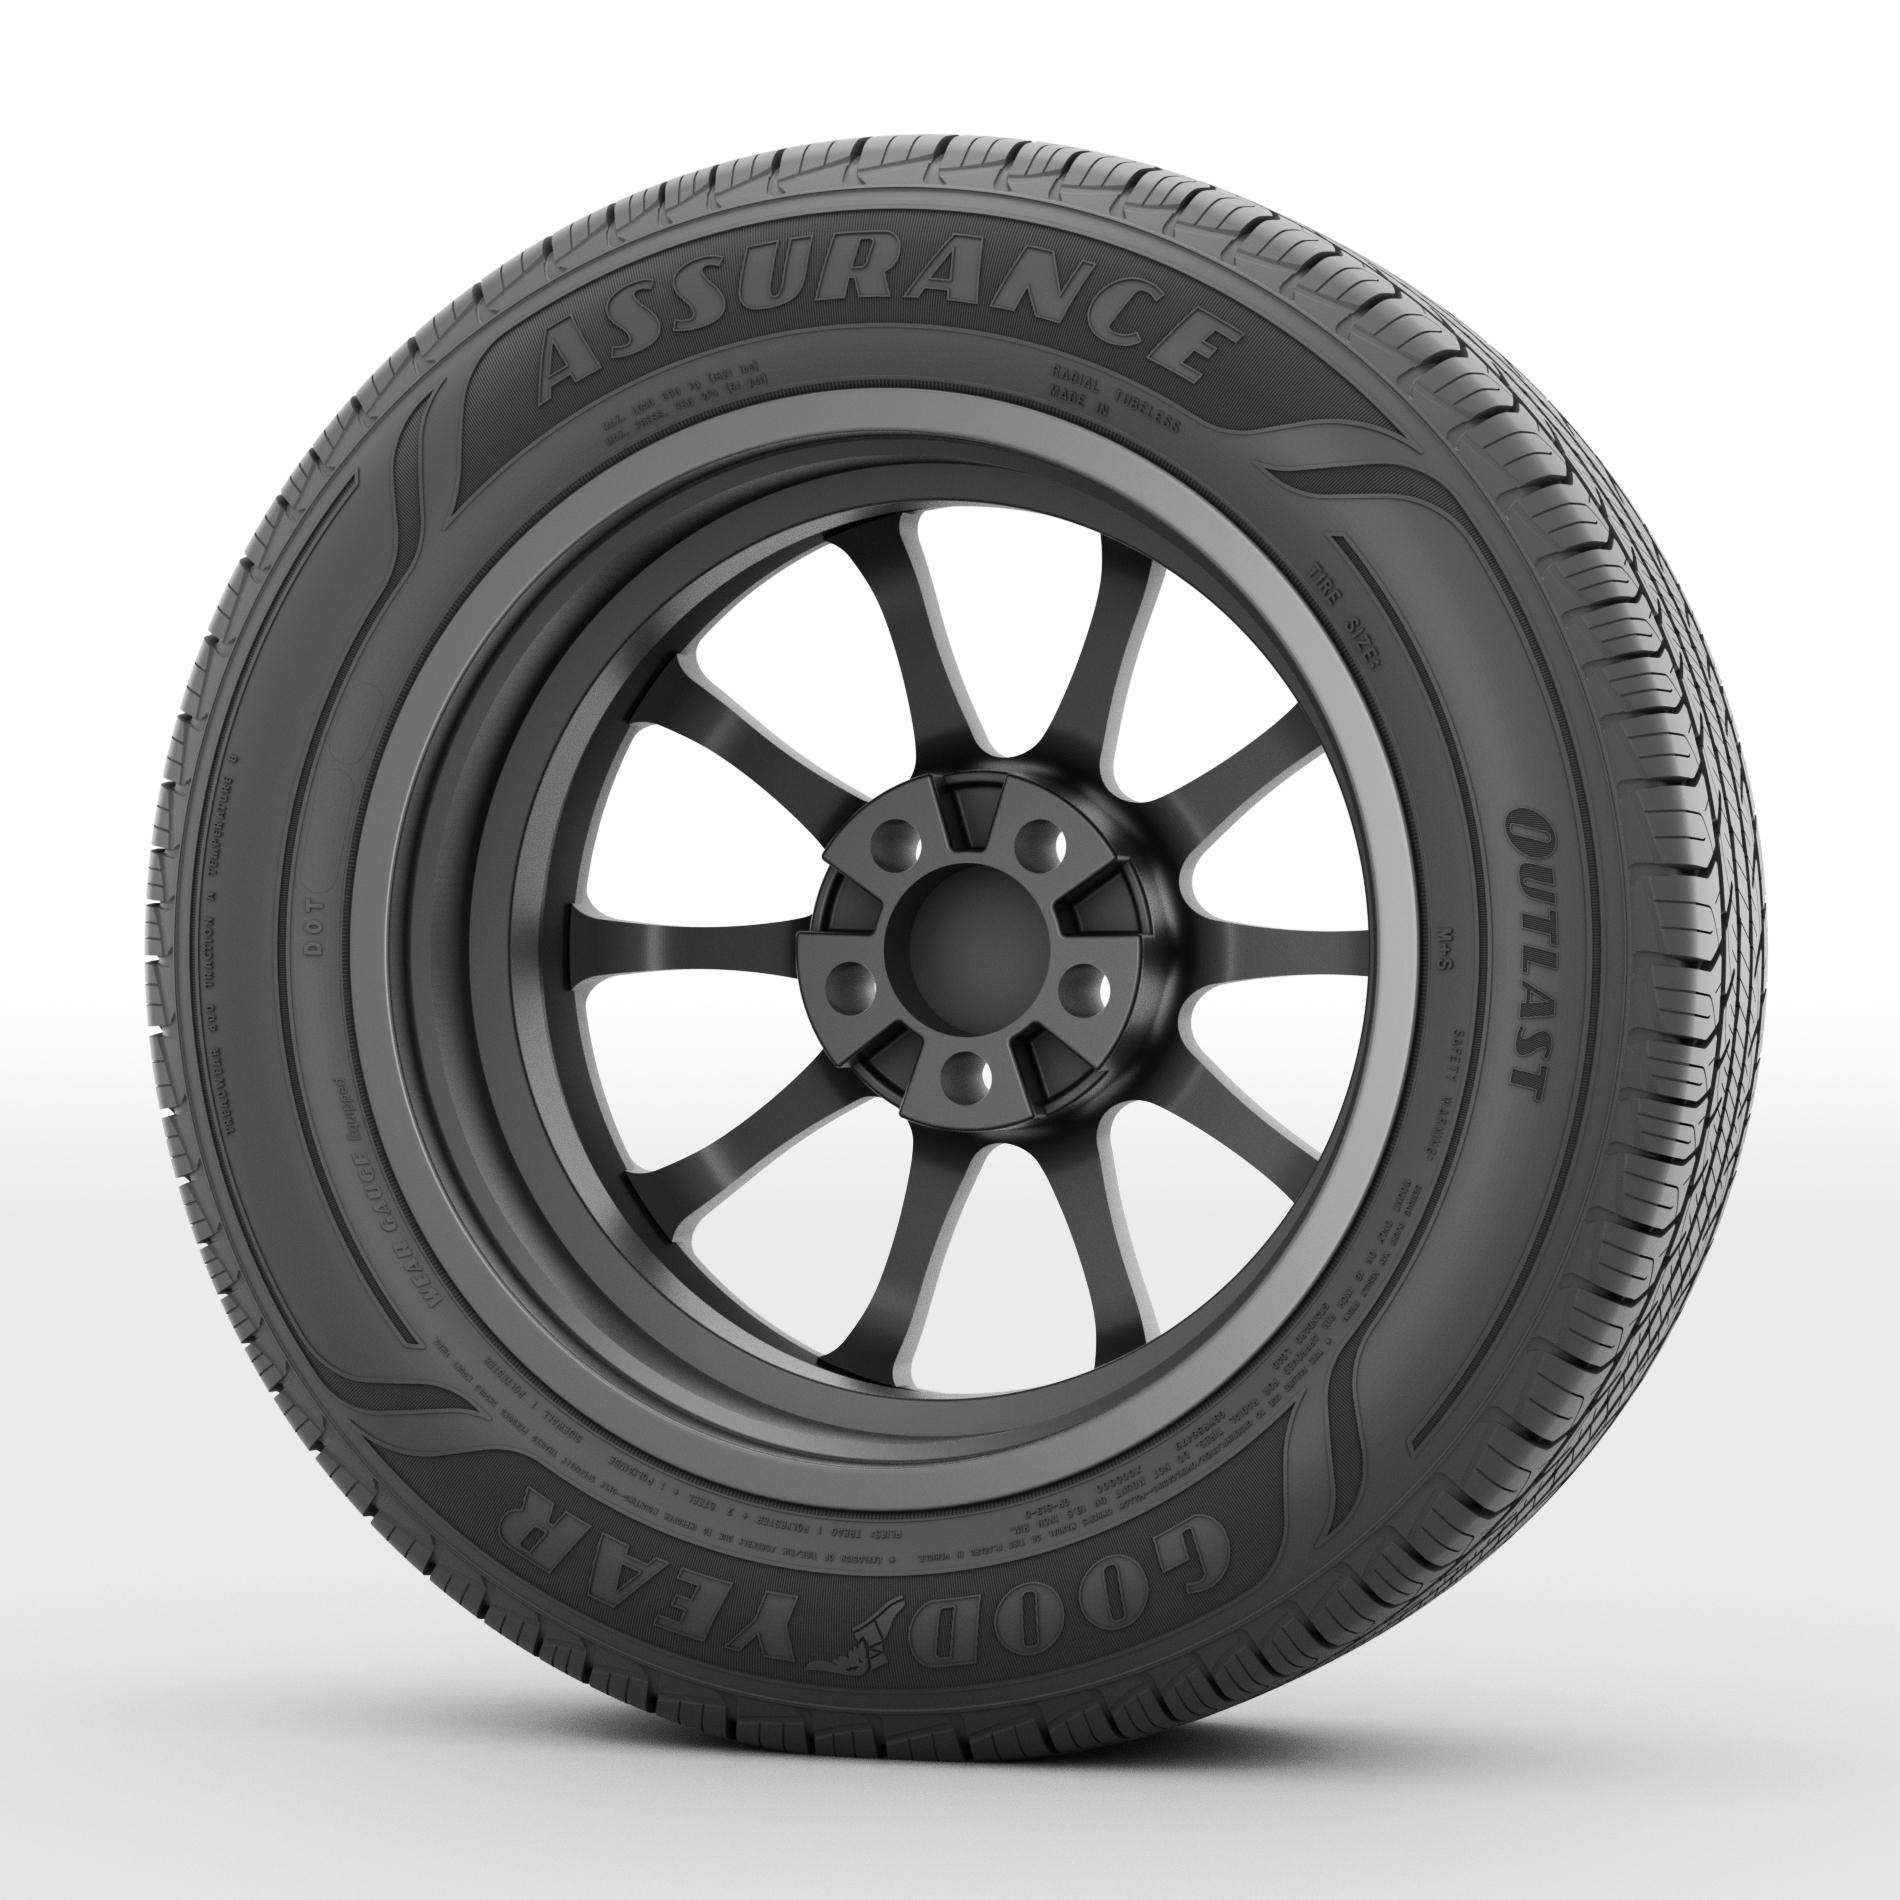 Goodyear Assurance Outlast 215/60R16 95V All-Season Tire